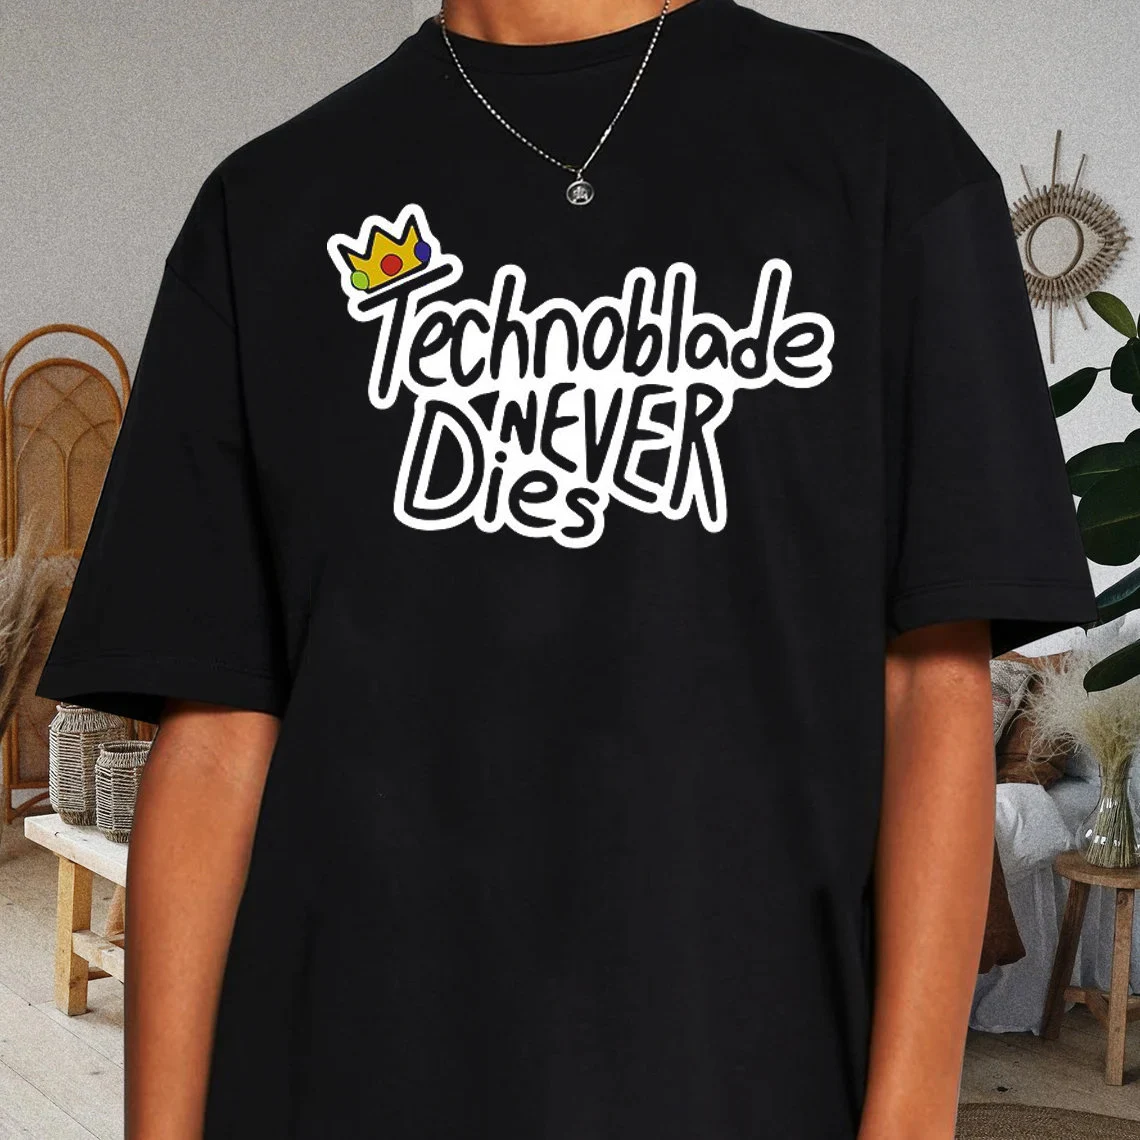 Technoblade Never Dies Sweatshirt Never Dies Shirt 